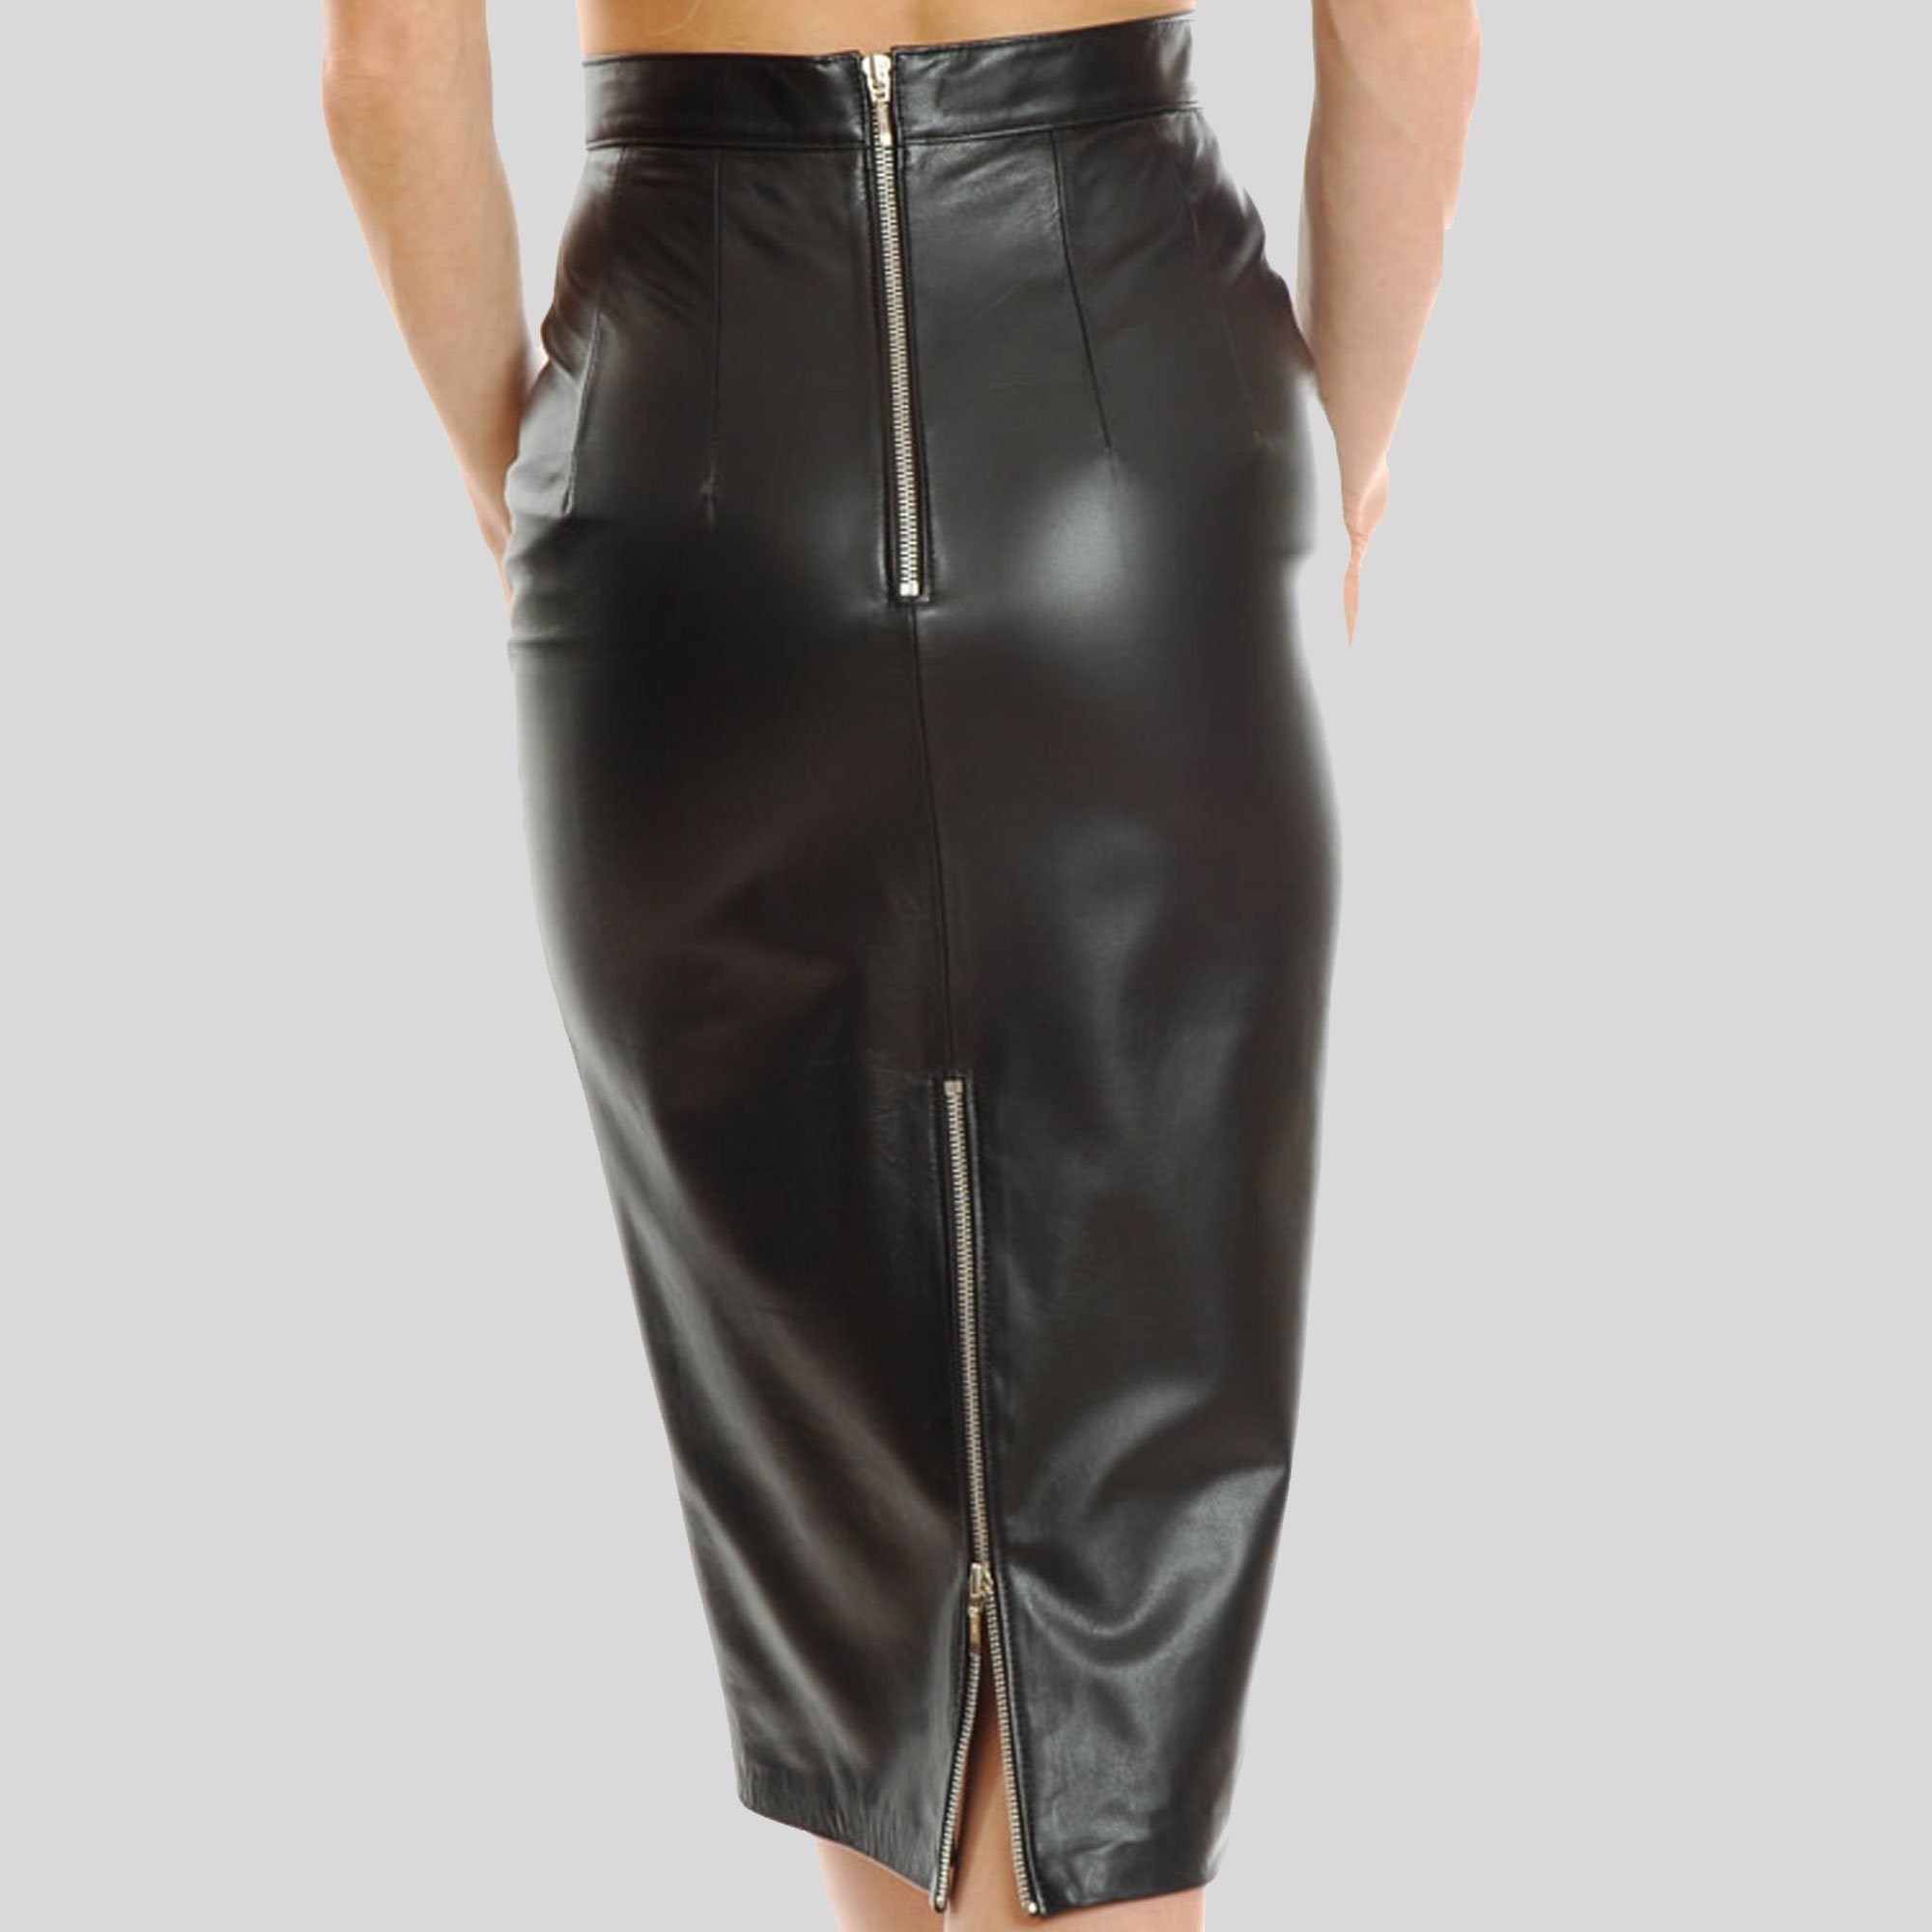 Ladies Tight Fitting Leather Skirtladies Fashion Slim Fitting - Etsy